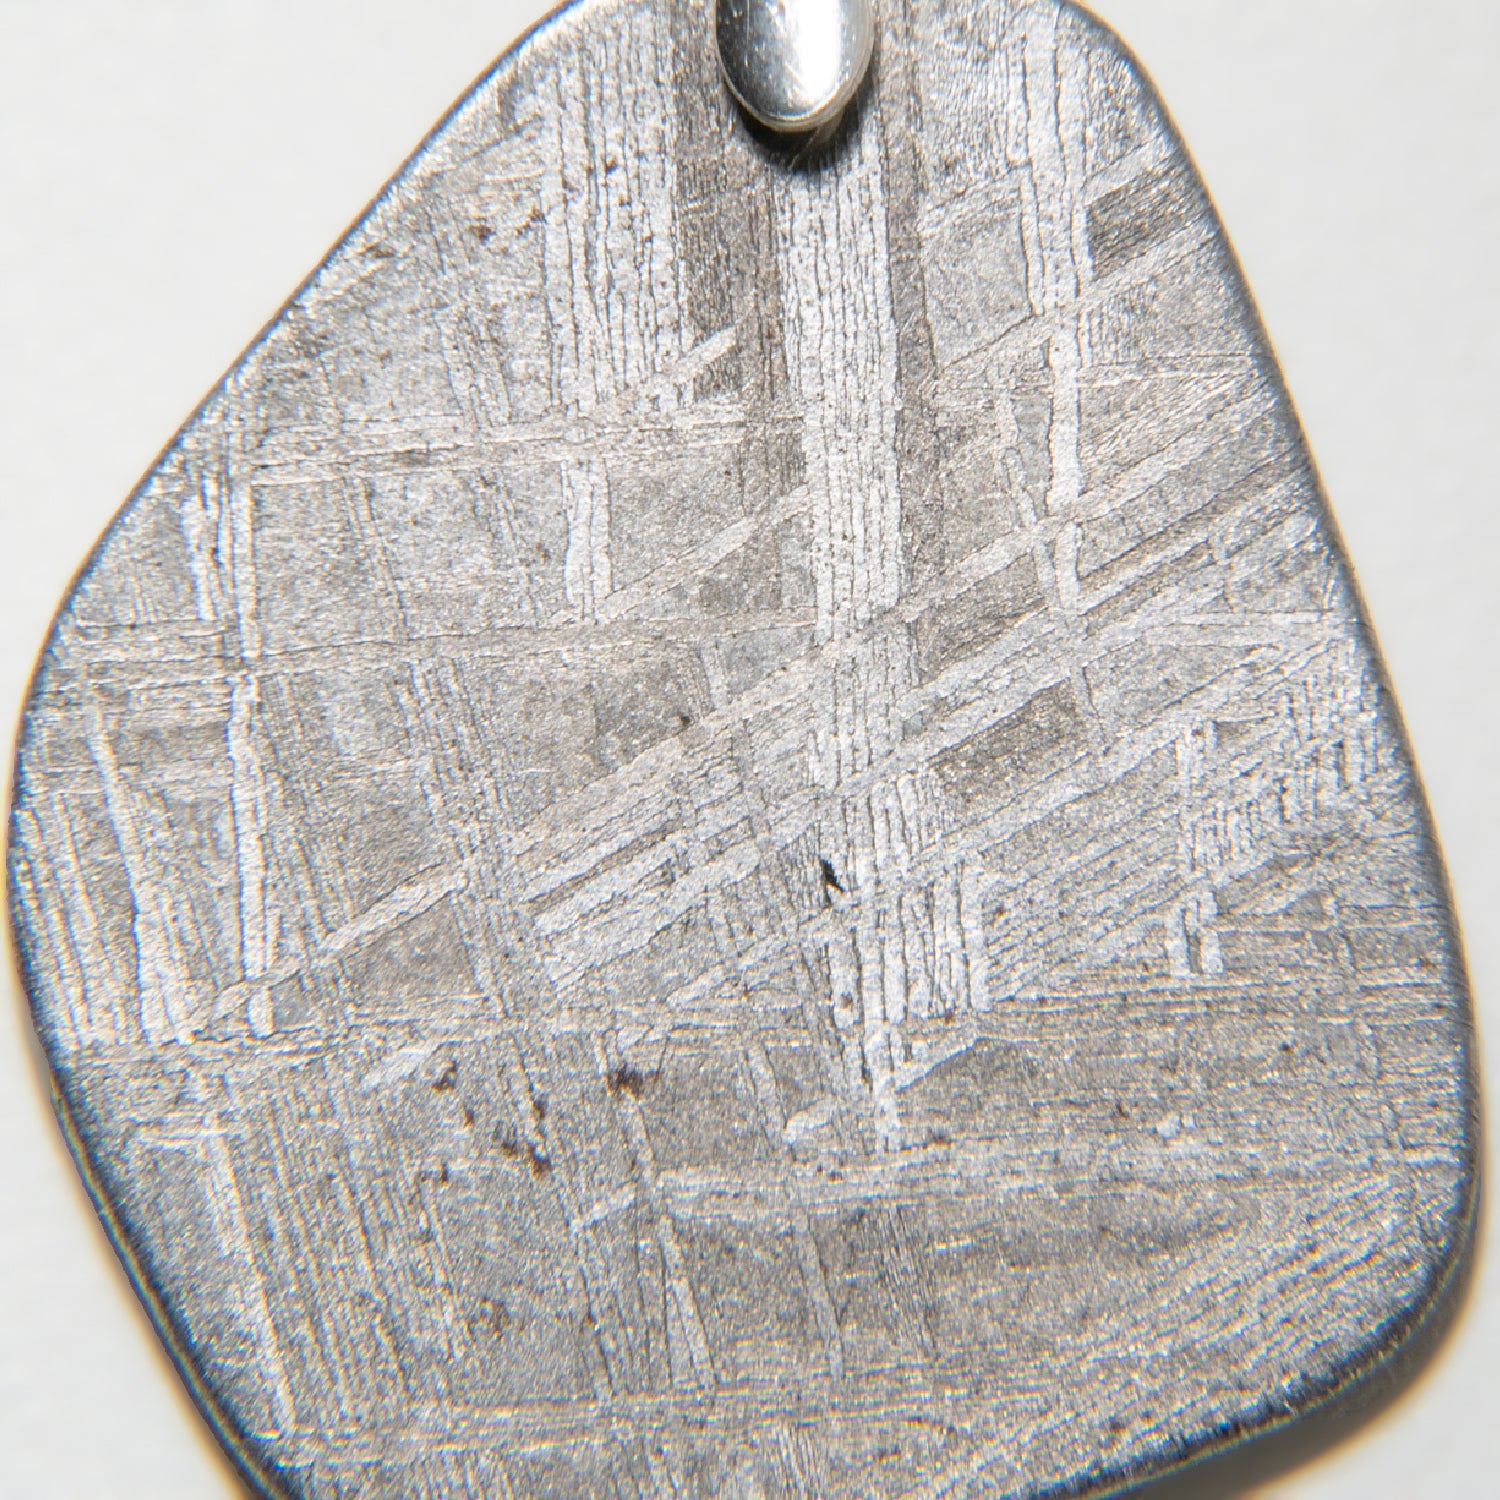 Genuine Muonionalusta Meteorite Pendant (10.6 grams) with 18" Sterling Silver Chain